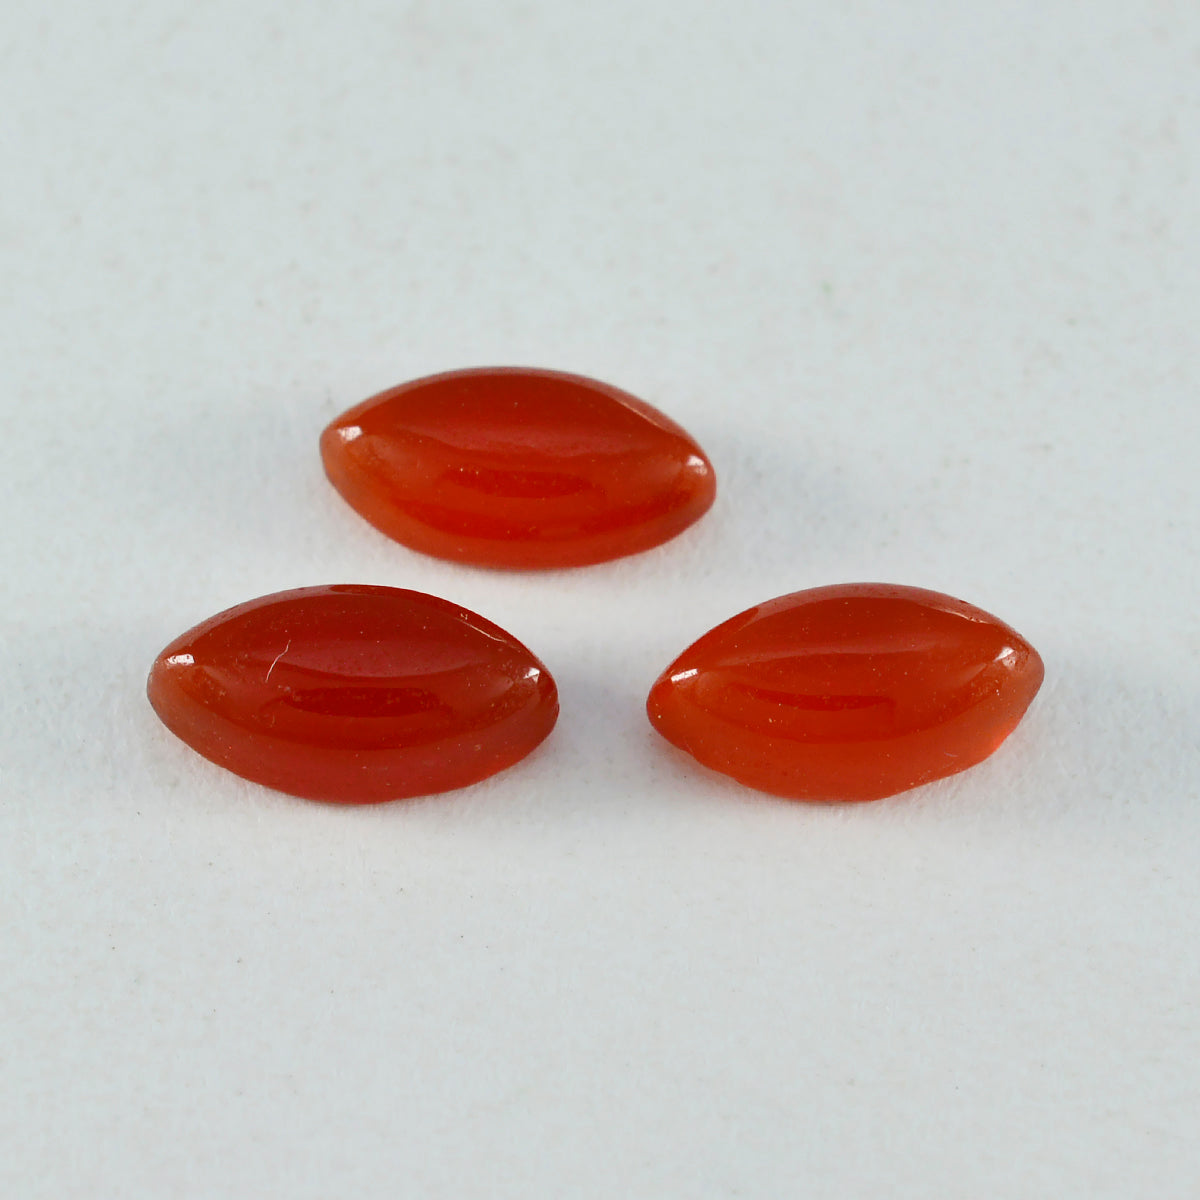 Riyogems 1PC Red Onyx Cabochon 11x22 mm Marquise Shape amazing Quality Stone